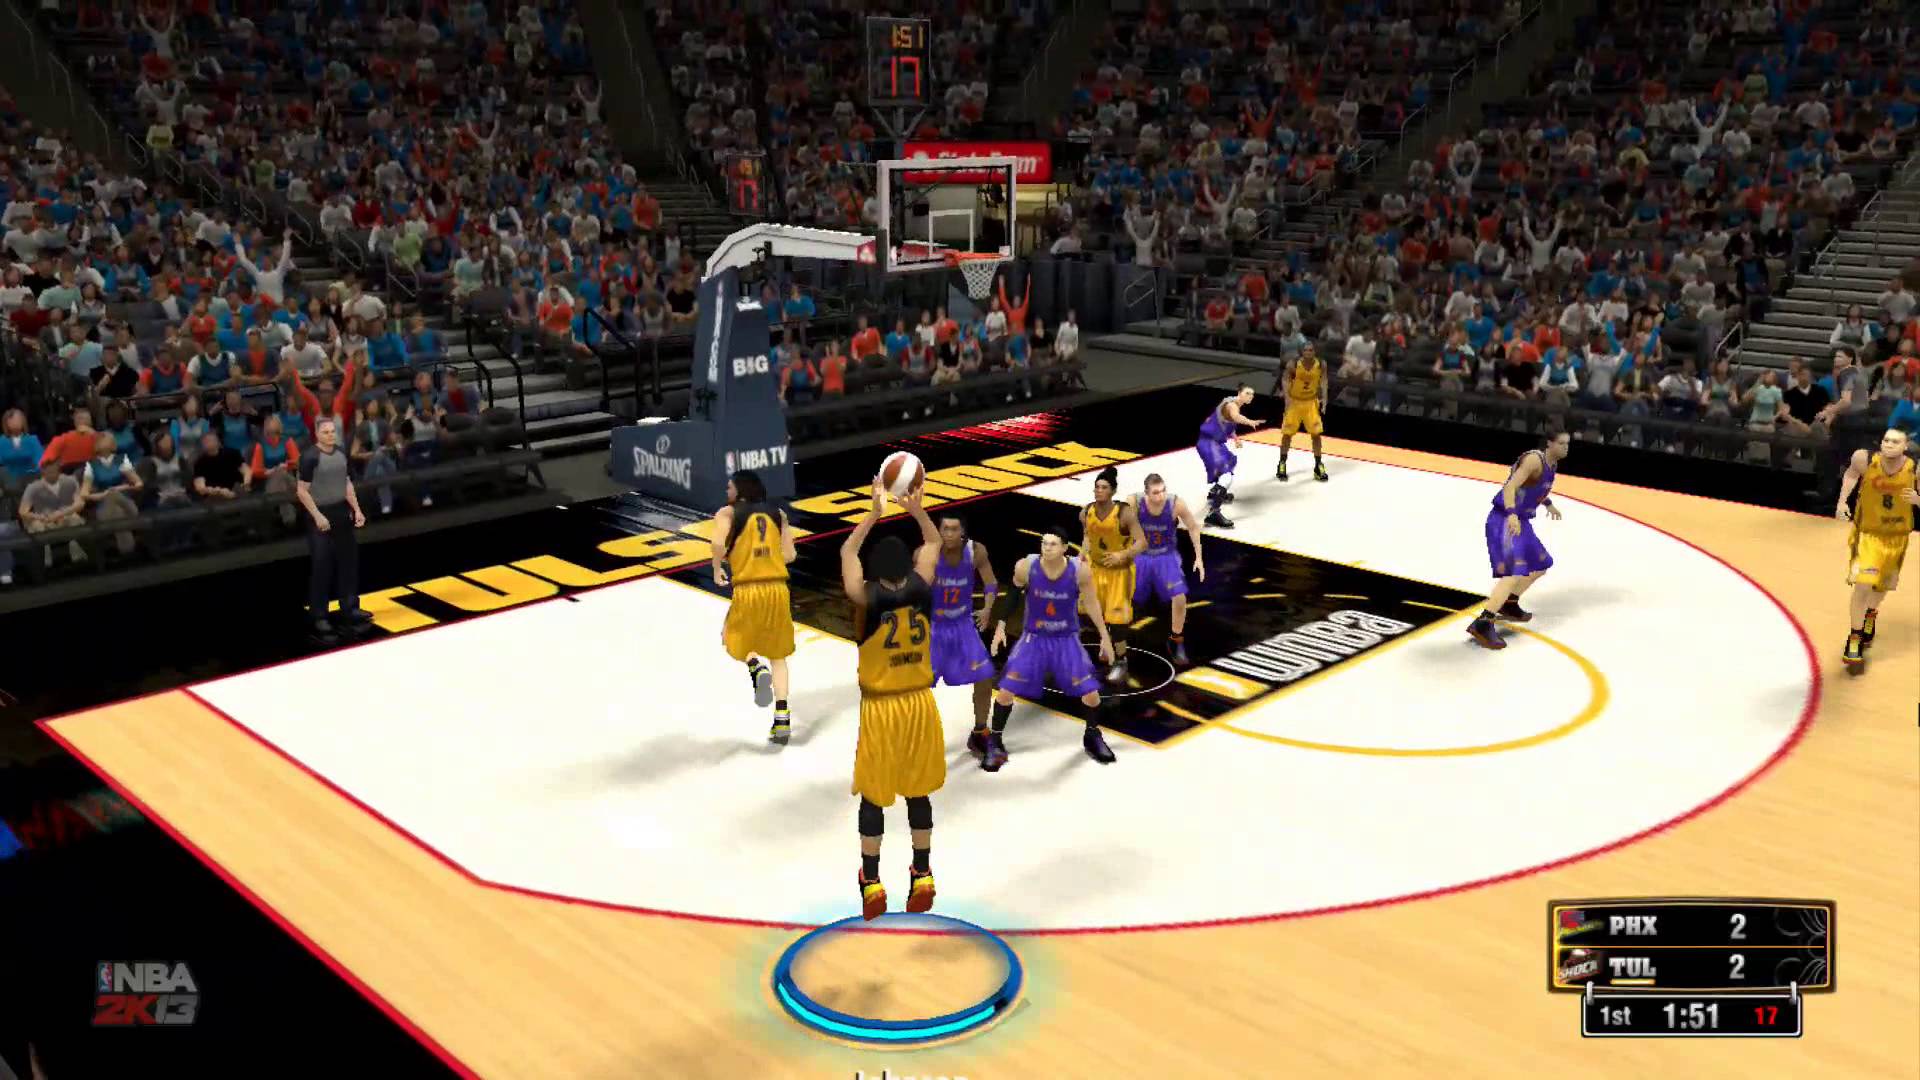 NBA 2K13 - WNBA Mod - Brittney Griner Dunk - YouTube